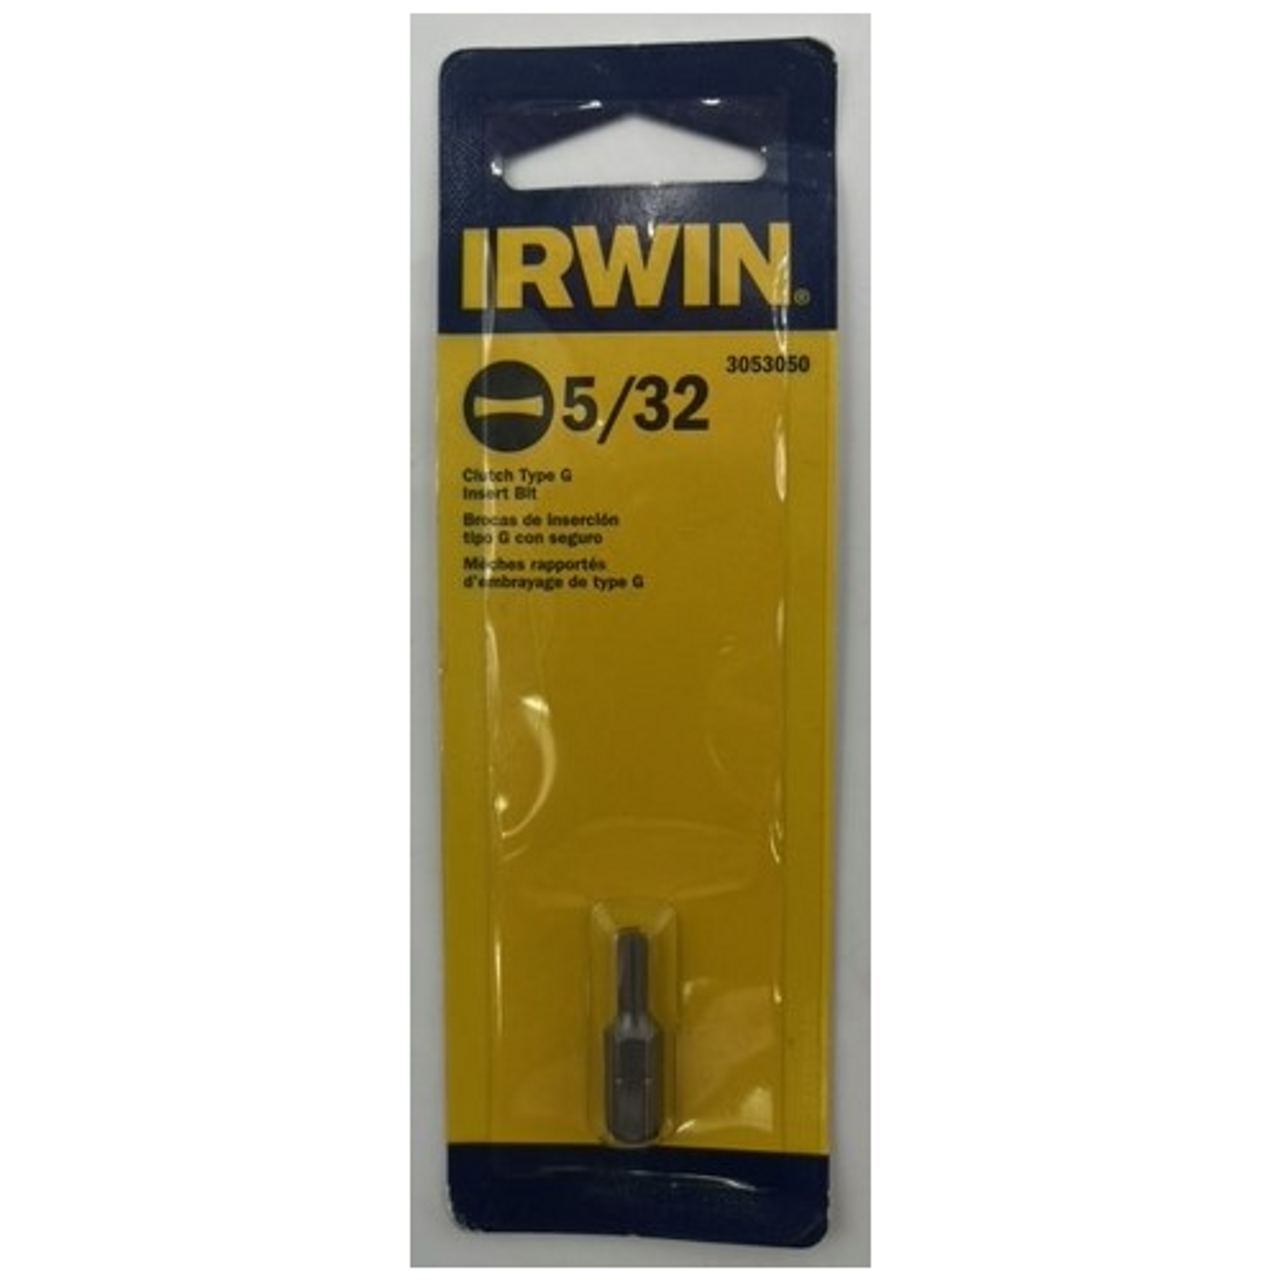 Irwin 3053050 Clutch Type G Insert Bit 5/32 inch x 1 inch - 1 pack